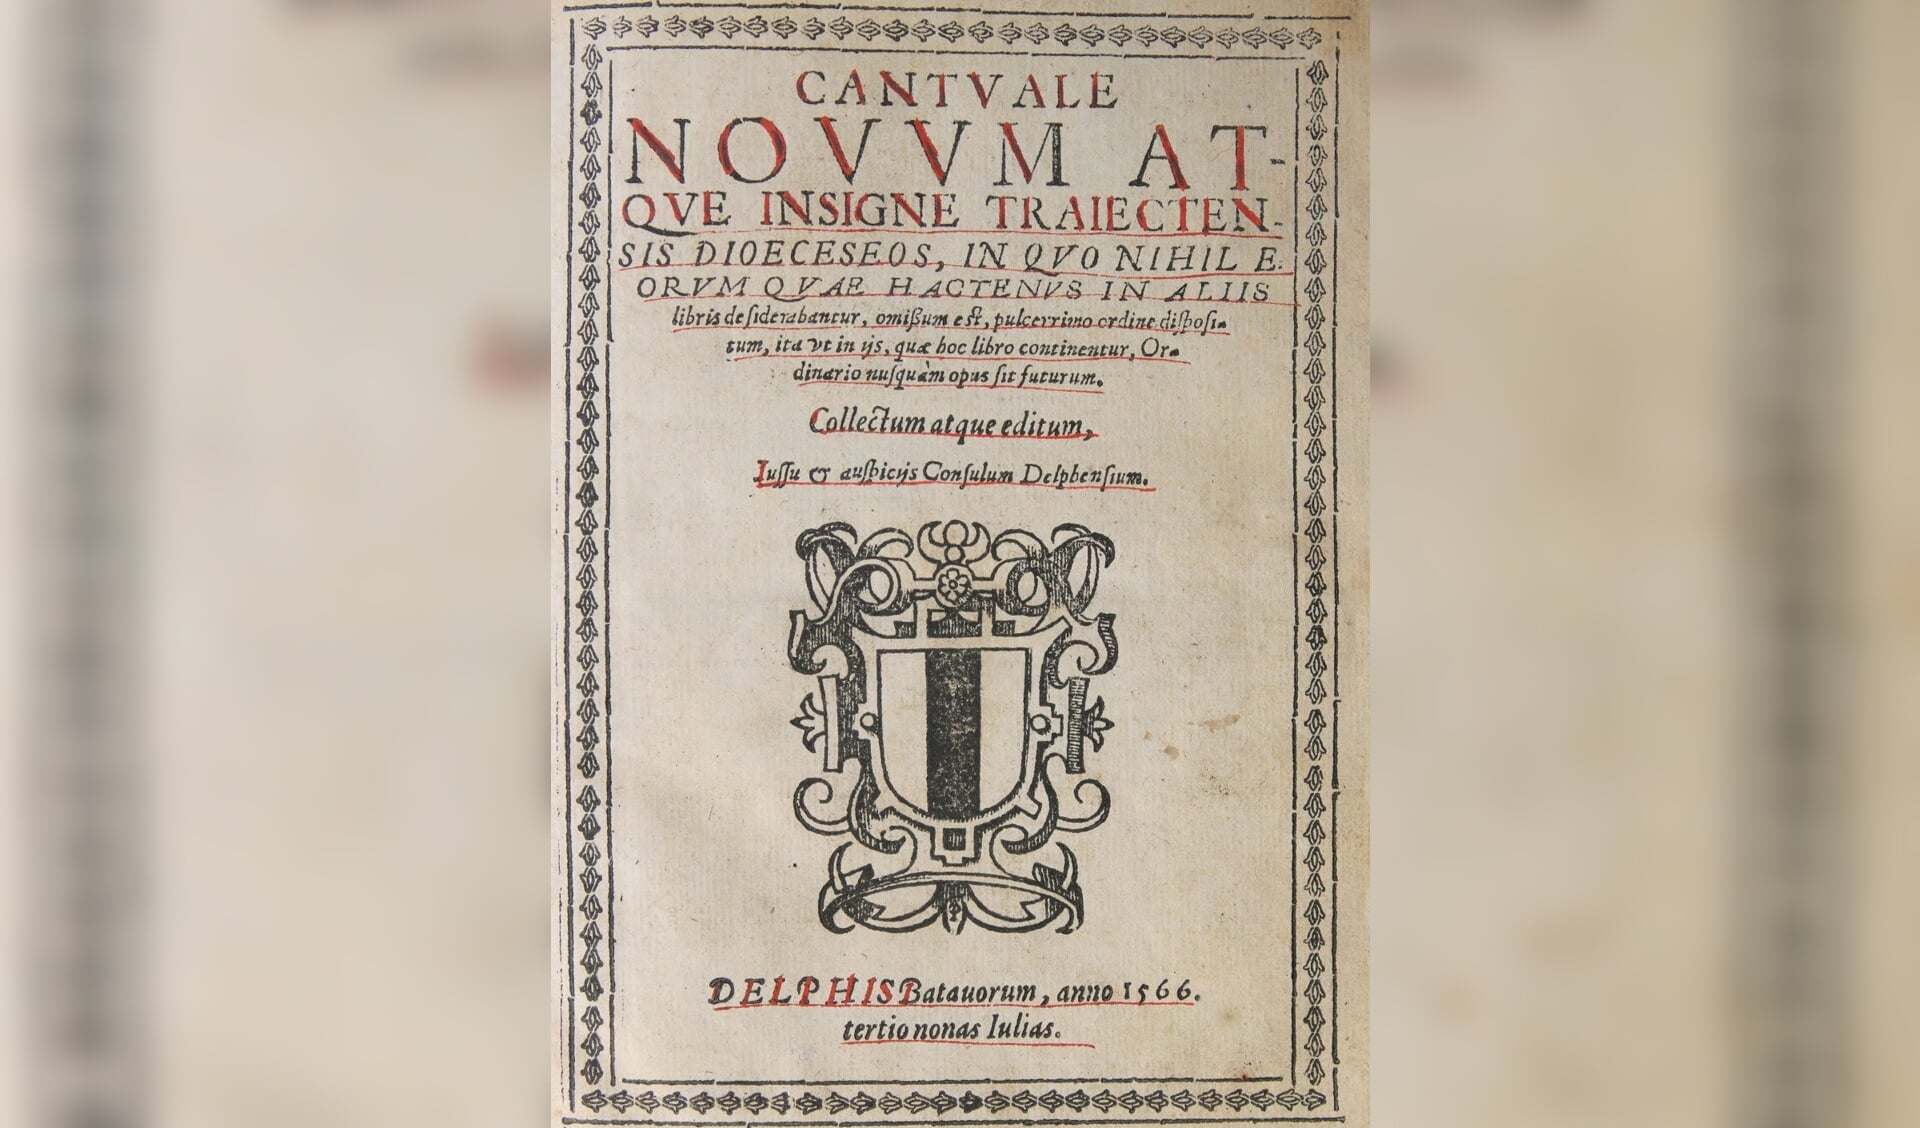 Titelpagina van Delfts gezangboek ‘Cantuale Novum’ uit 1566 (copyright: Stadsarchief Delft).